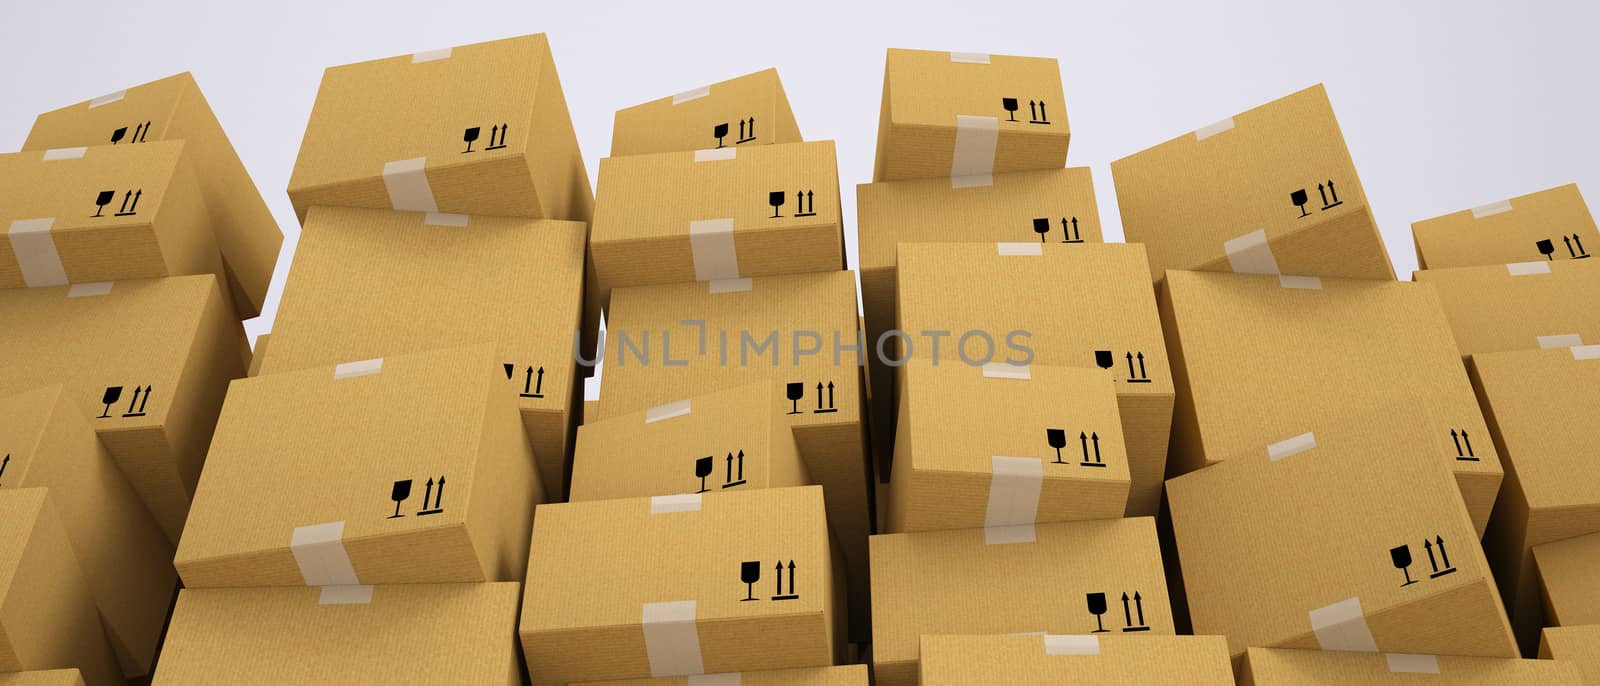 Carton boxes stacking by cherezoff